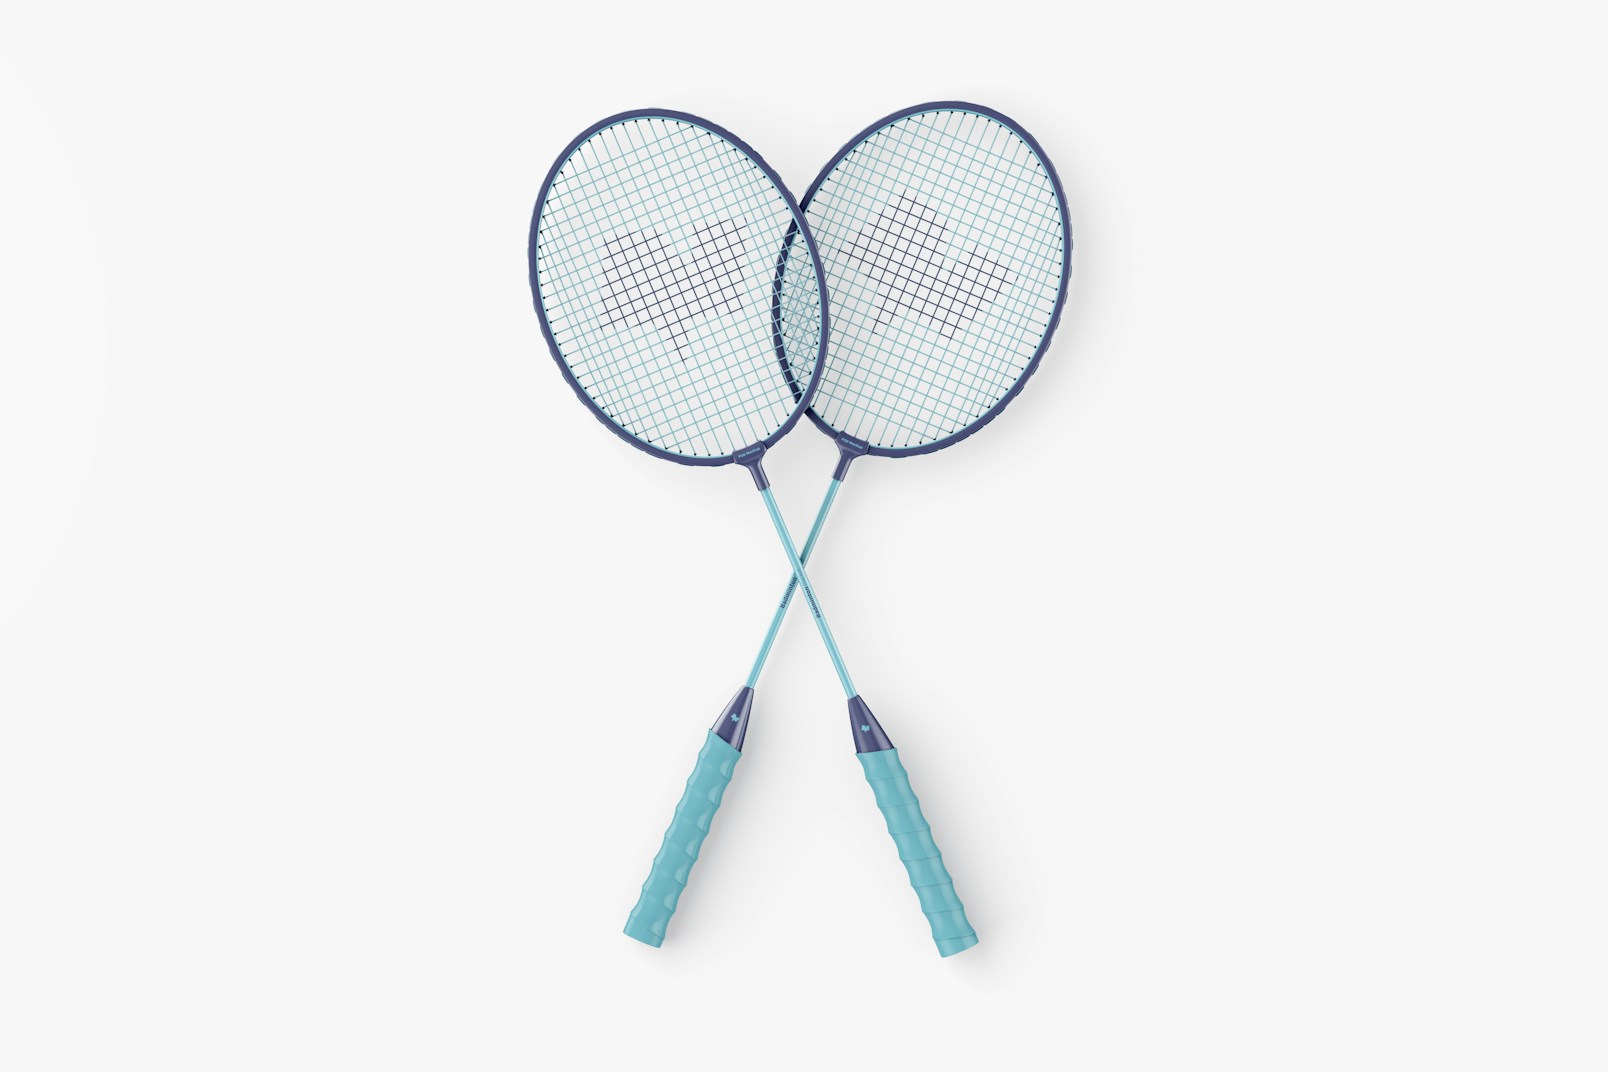 Badminton Rackets Mockup, Top View